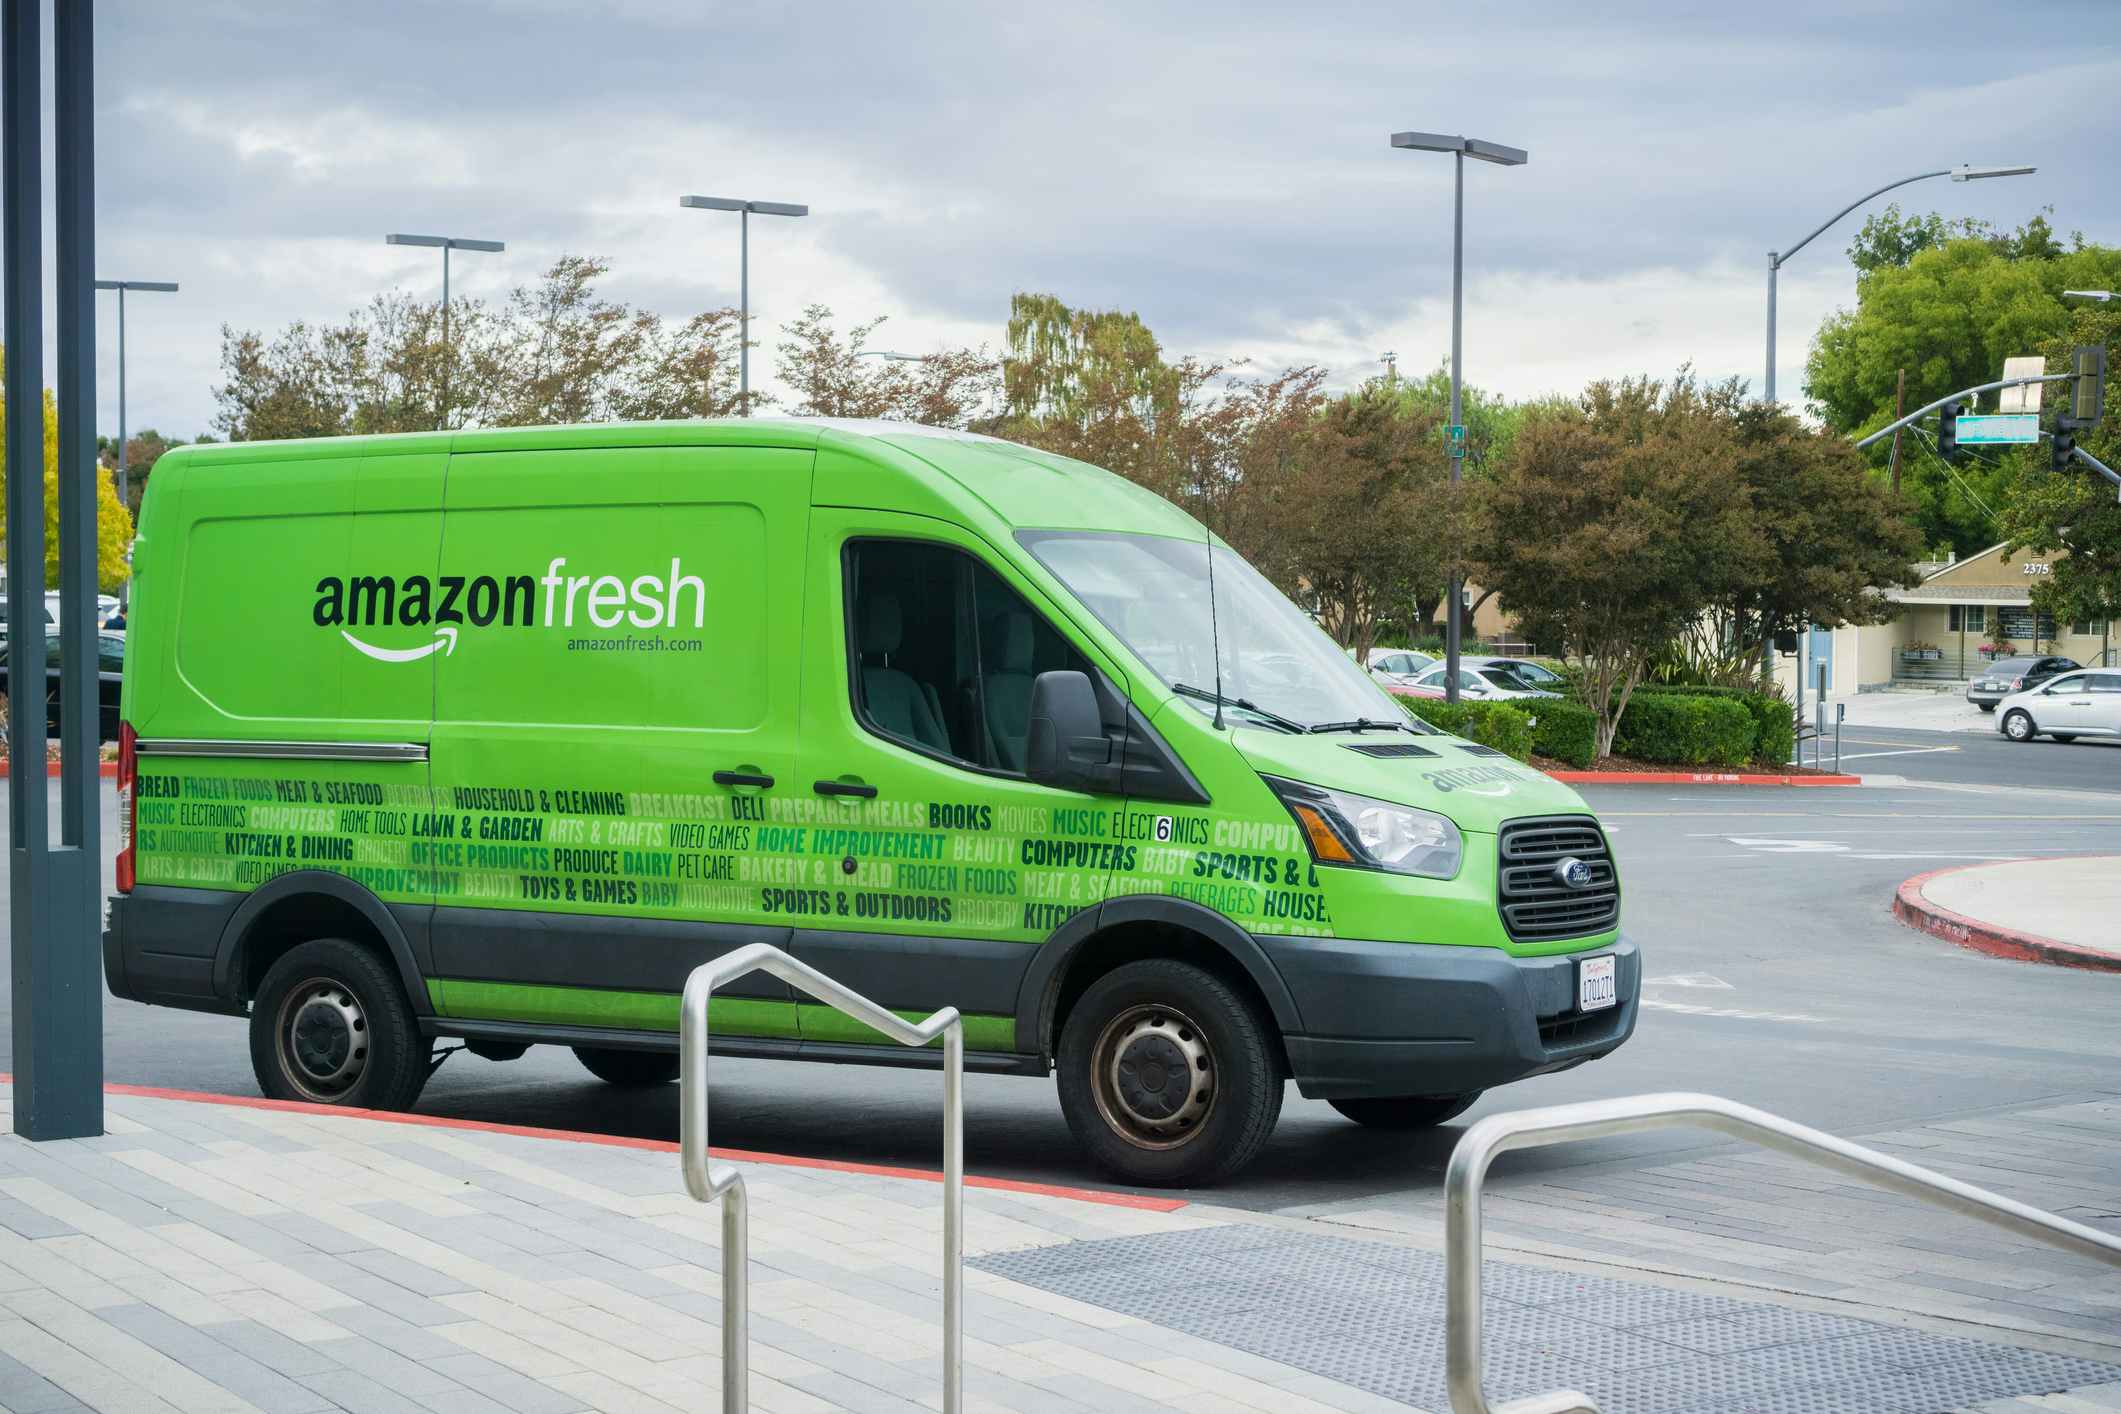 An Amazon fresh van